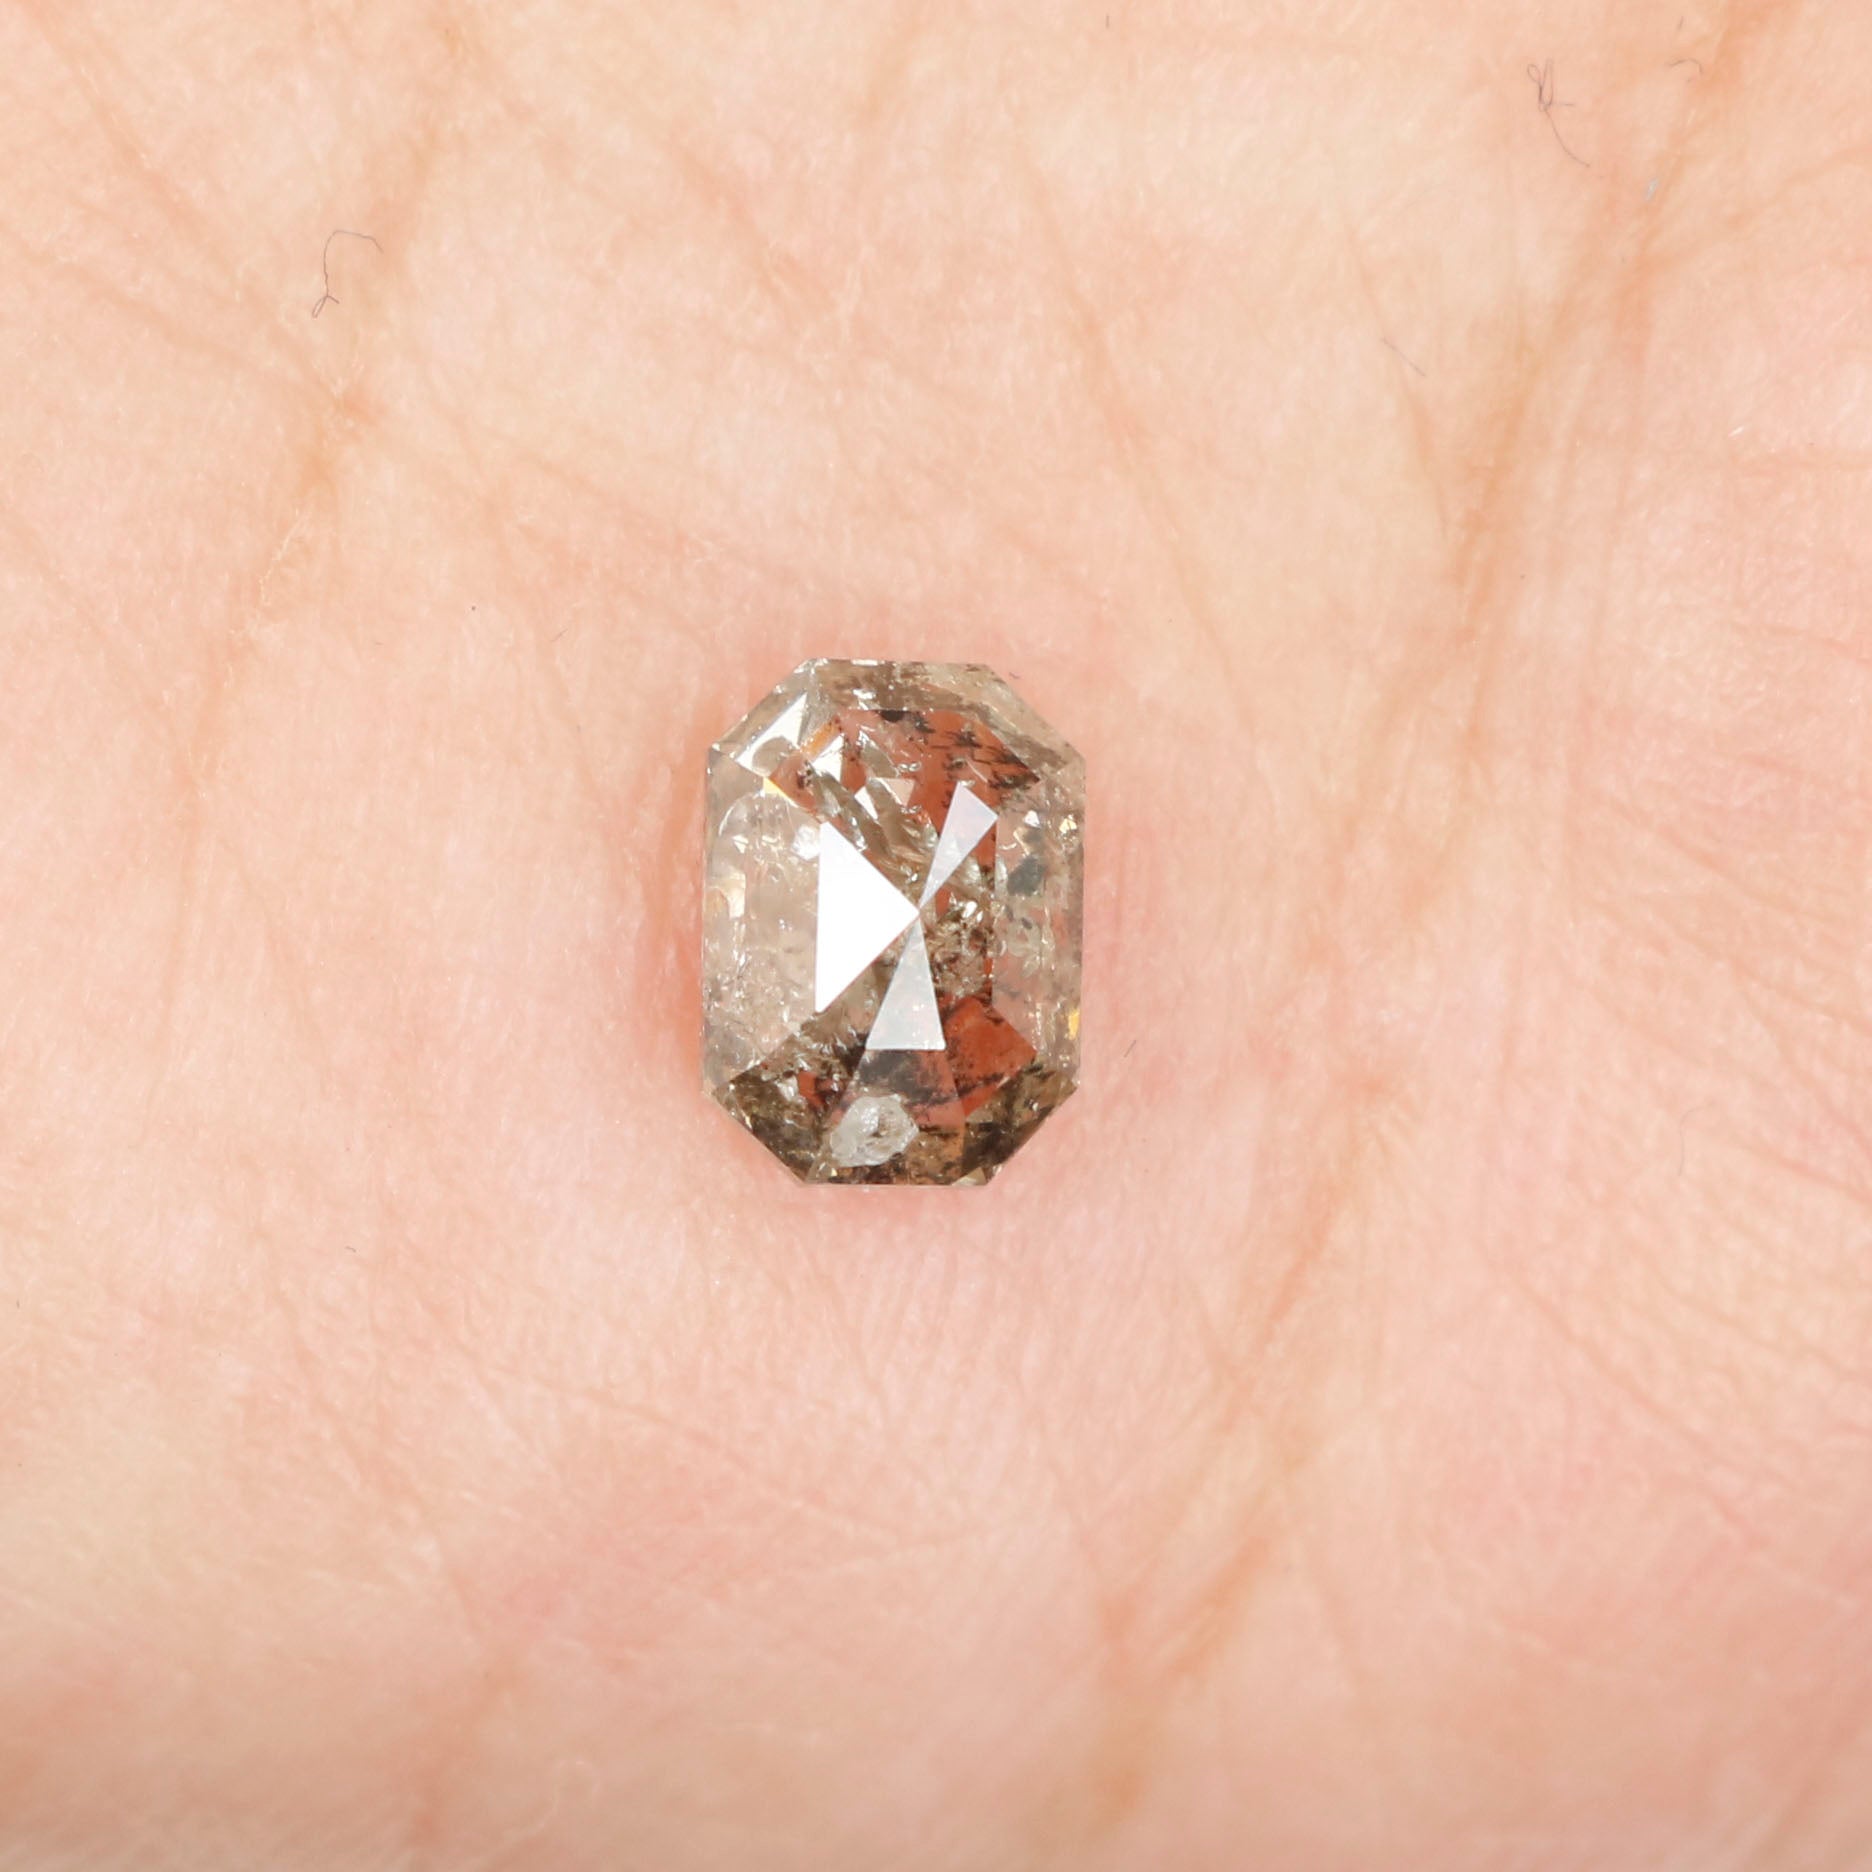 0.75 CT Natural Loose Emerald Shape Diamond Salt And Pepper Emerald Diamond 5.95 MM Black Grey Color Emerald Shape Rose Cut Diamond QL9987